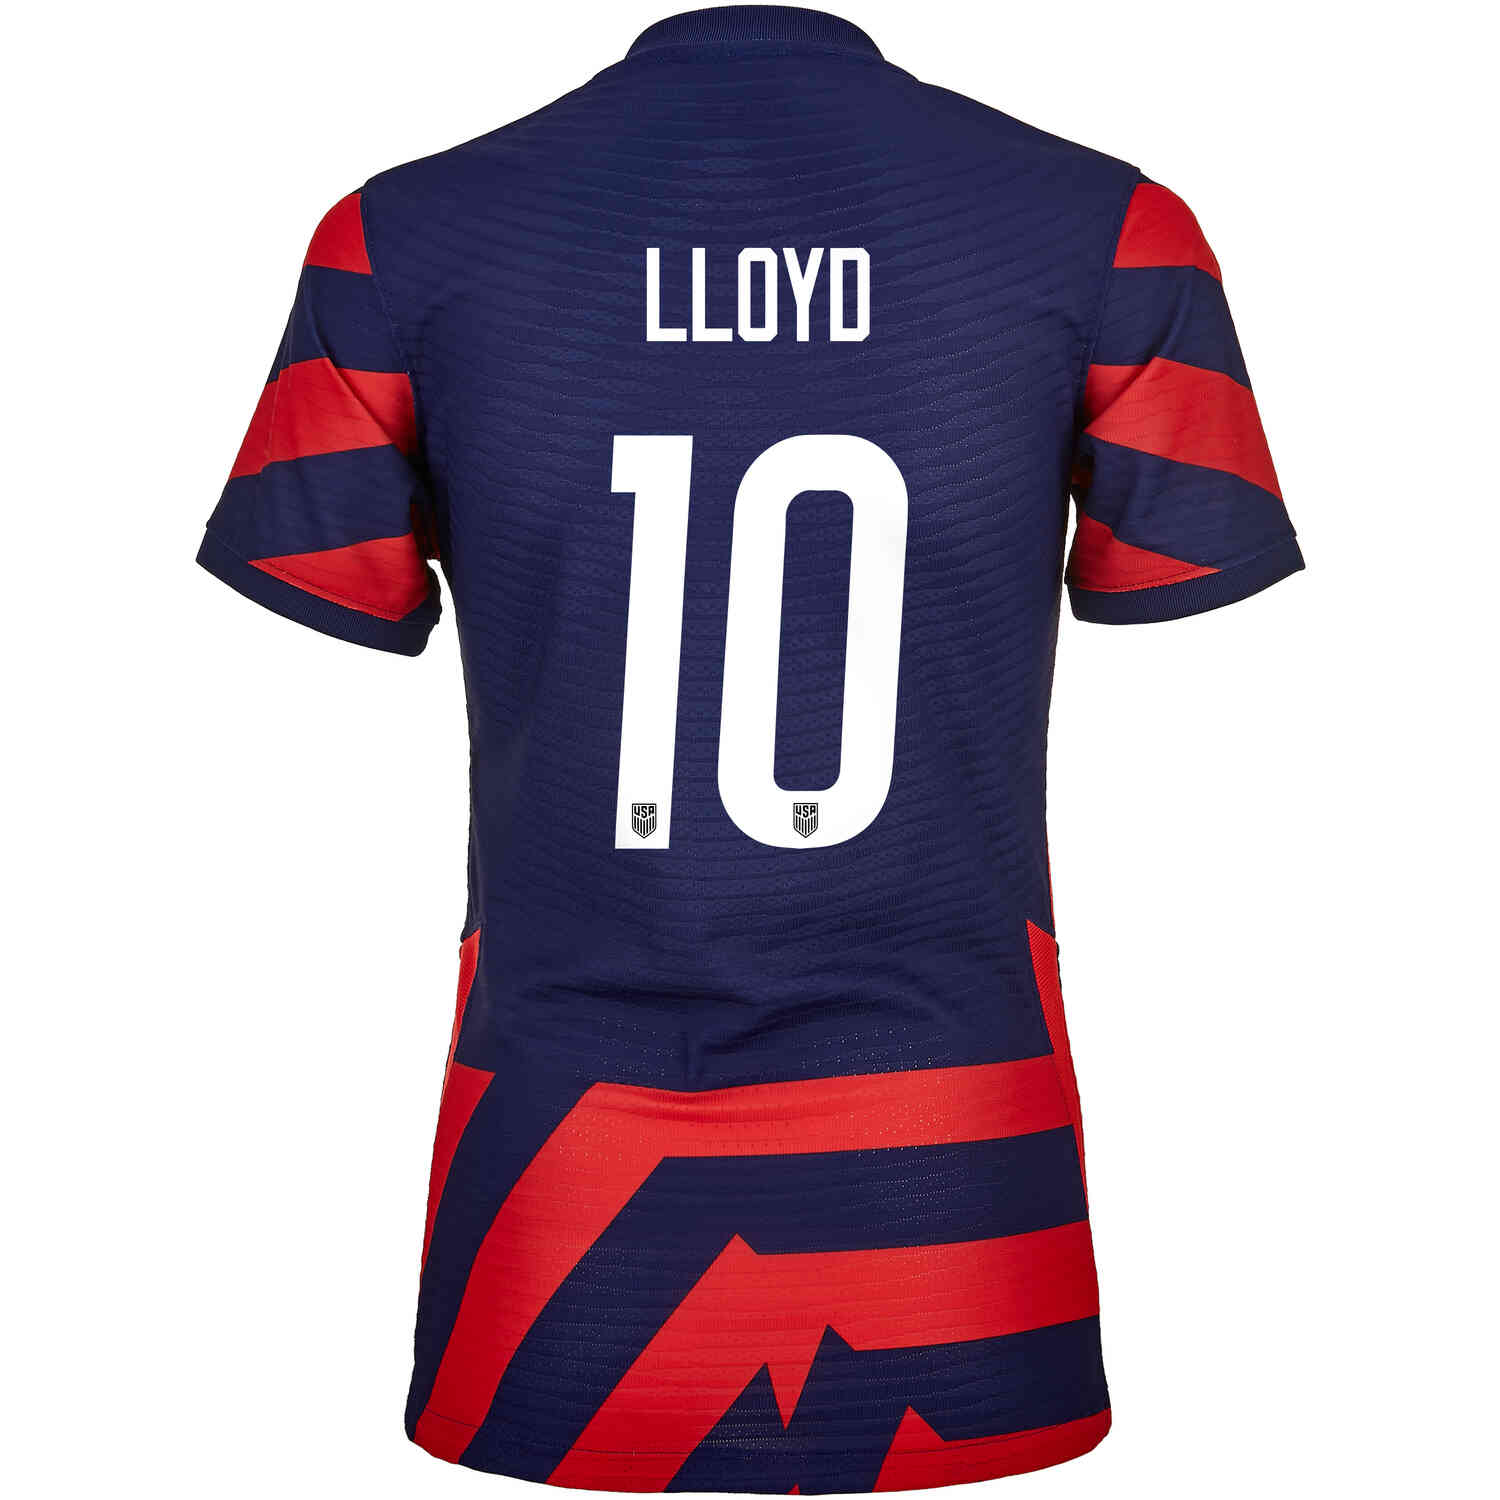 Carli Lloyd Women's Soccer Design - Black Letters Classic T-Shirt for Sale  by Dumpsterfireco